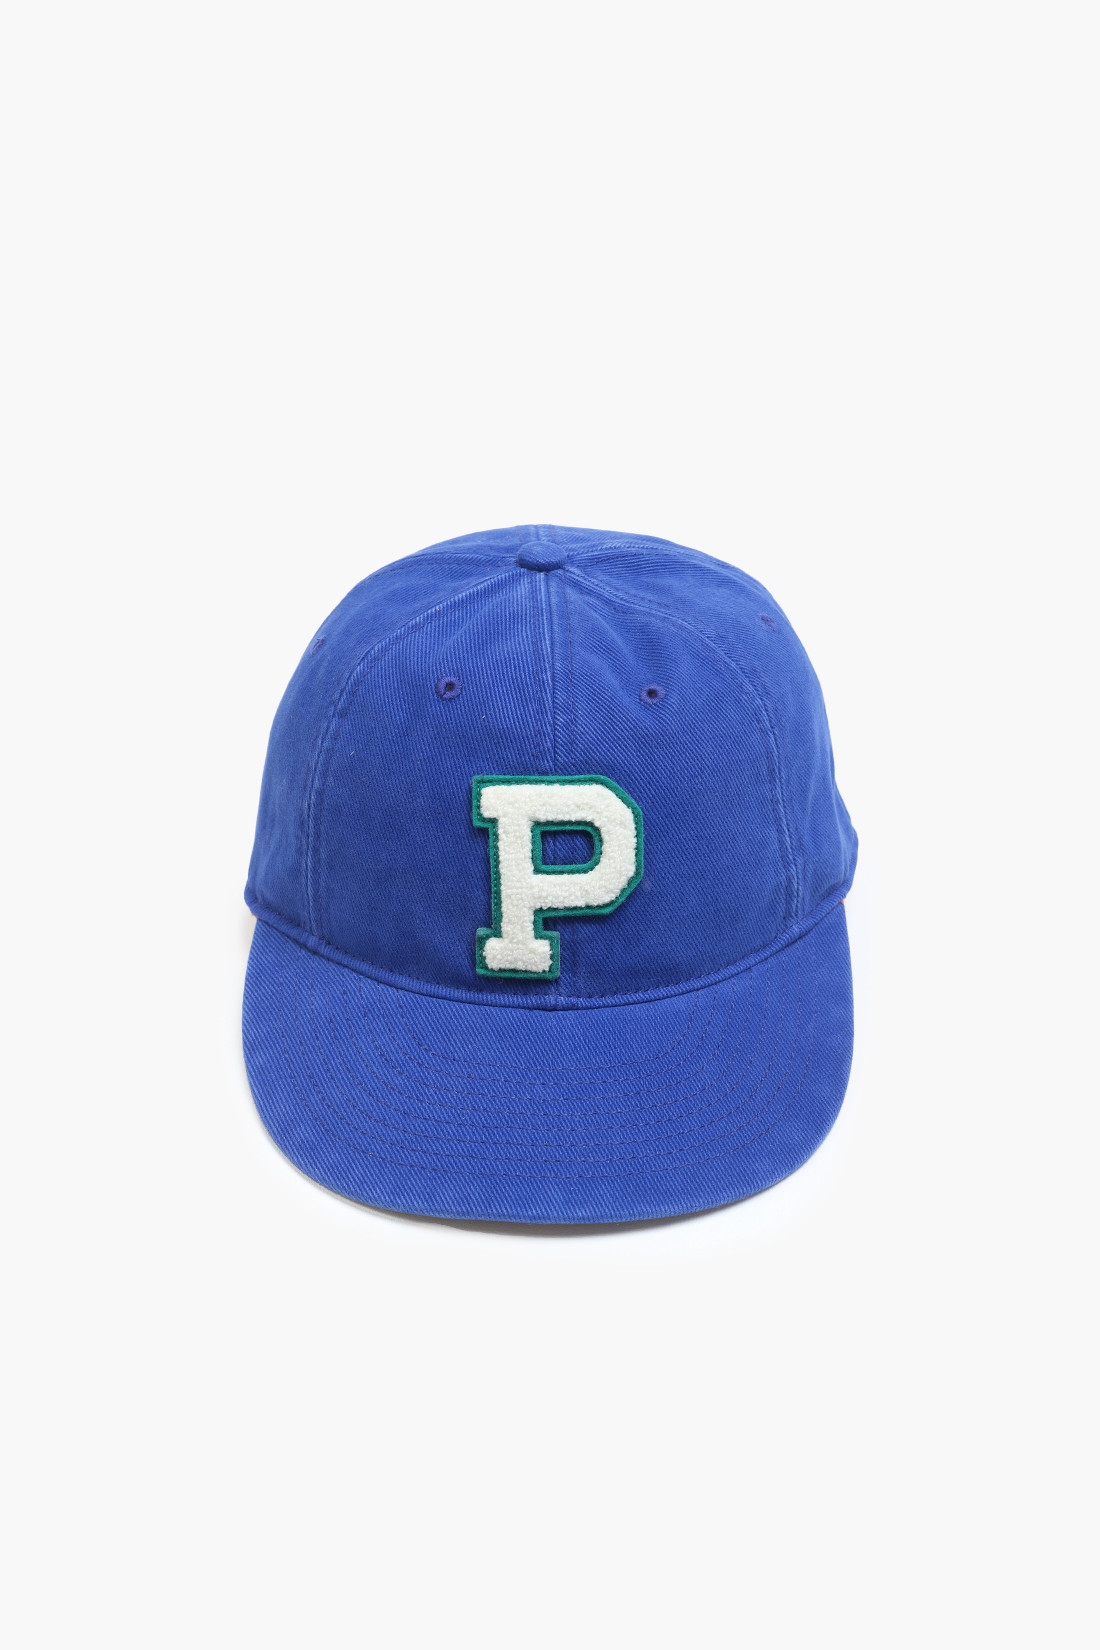 Authentic baseball cap Blue